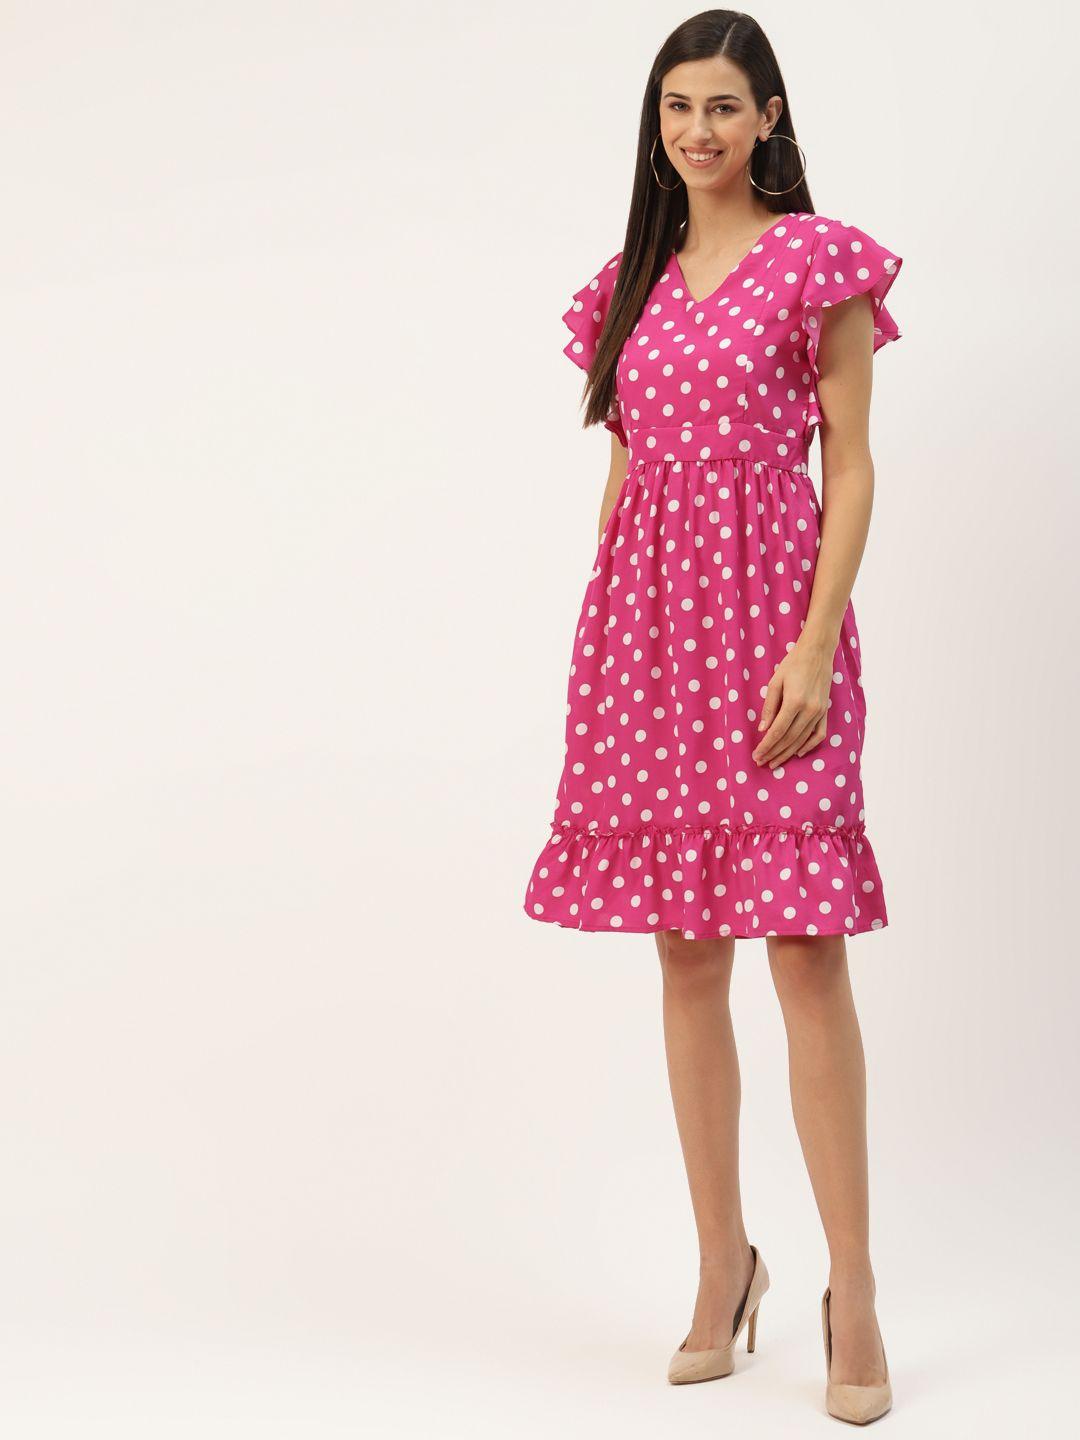 brinns pink & white printed a-line dress